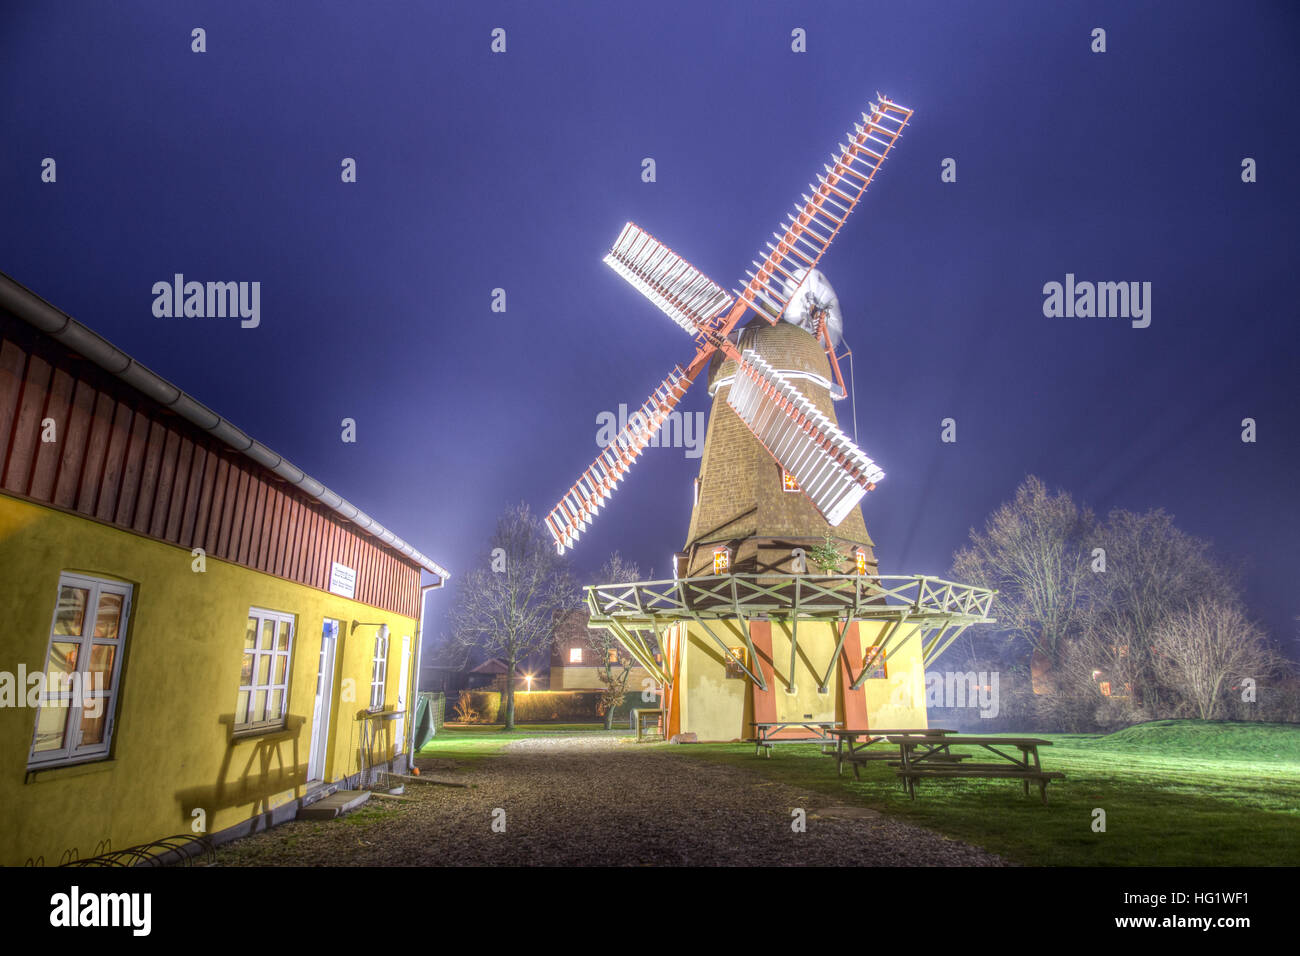 Ramloese, Denmark - December 30, 2016: HDR photo of an illuminated historic Danish windmill Stock Photo